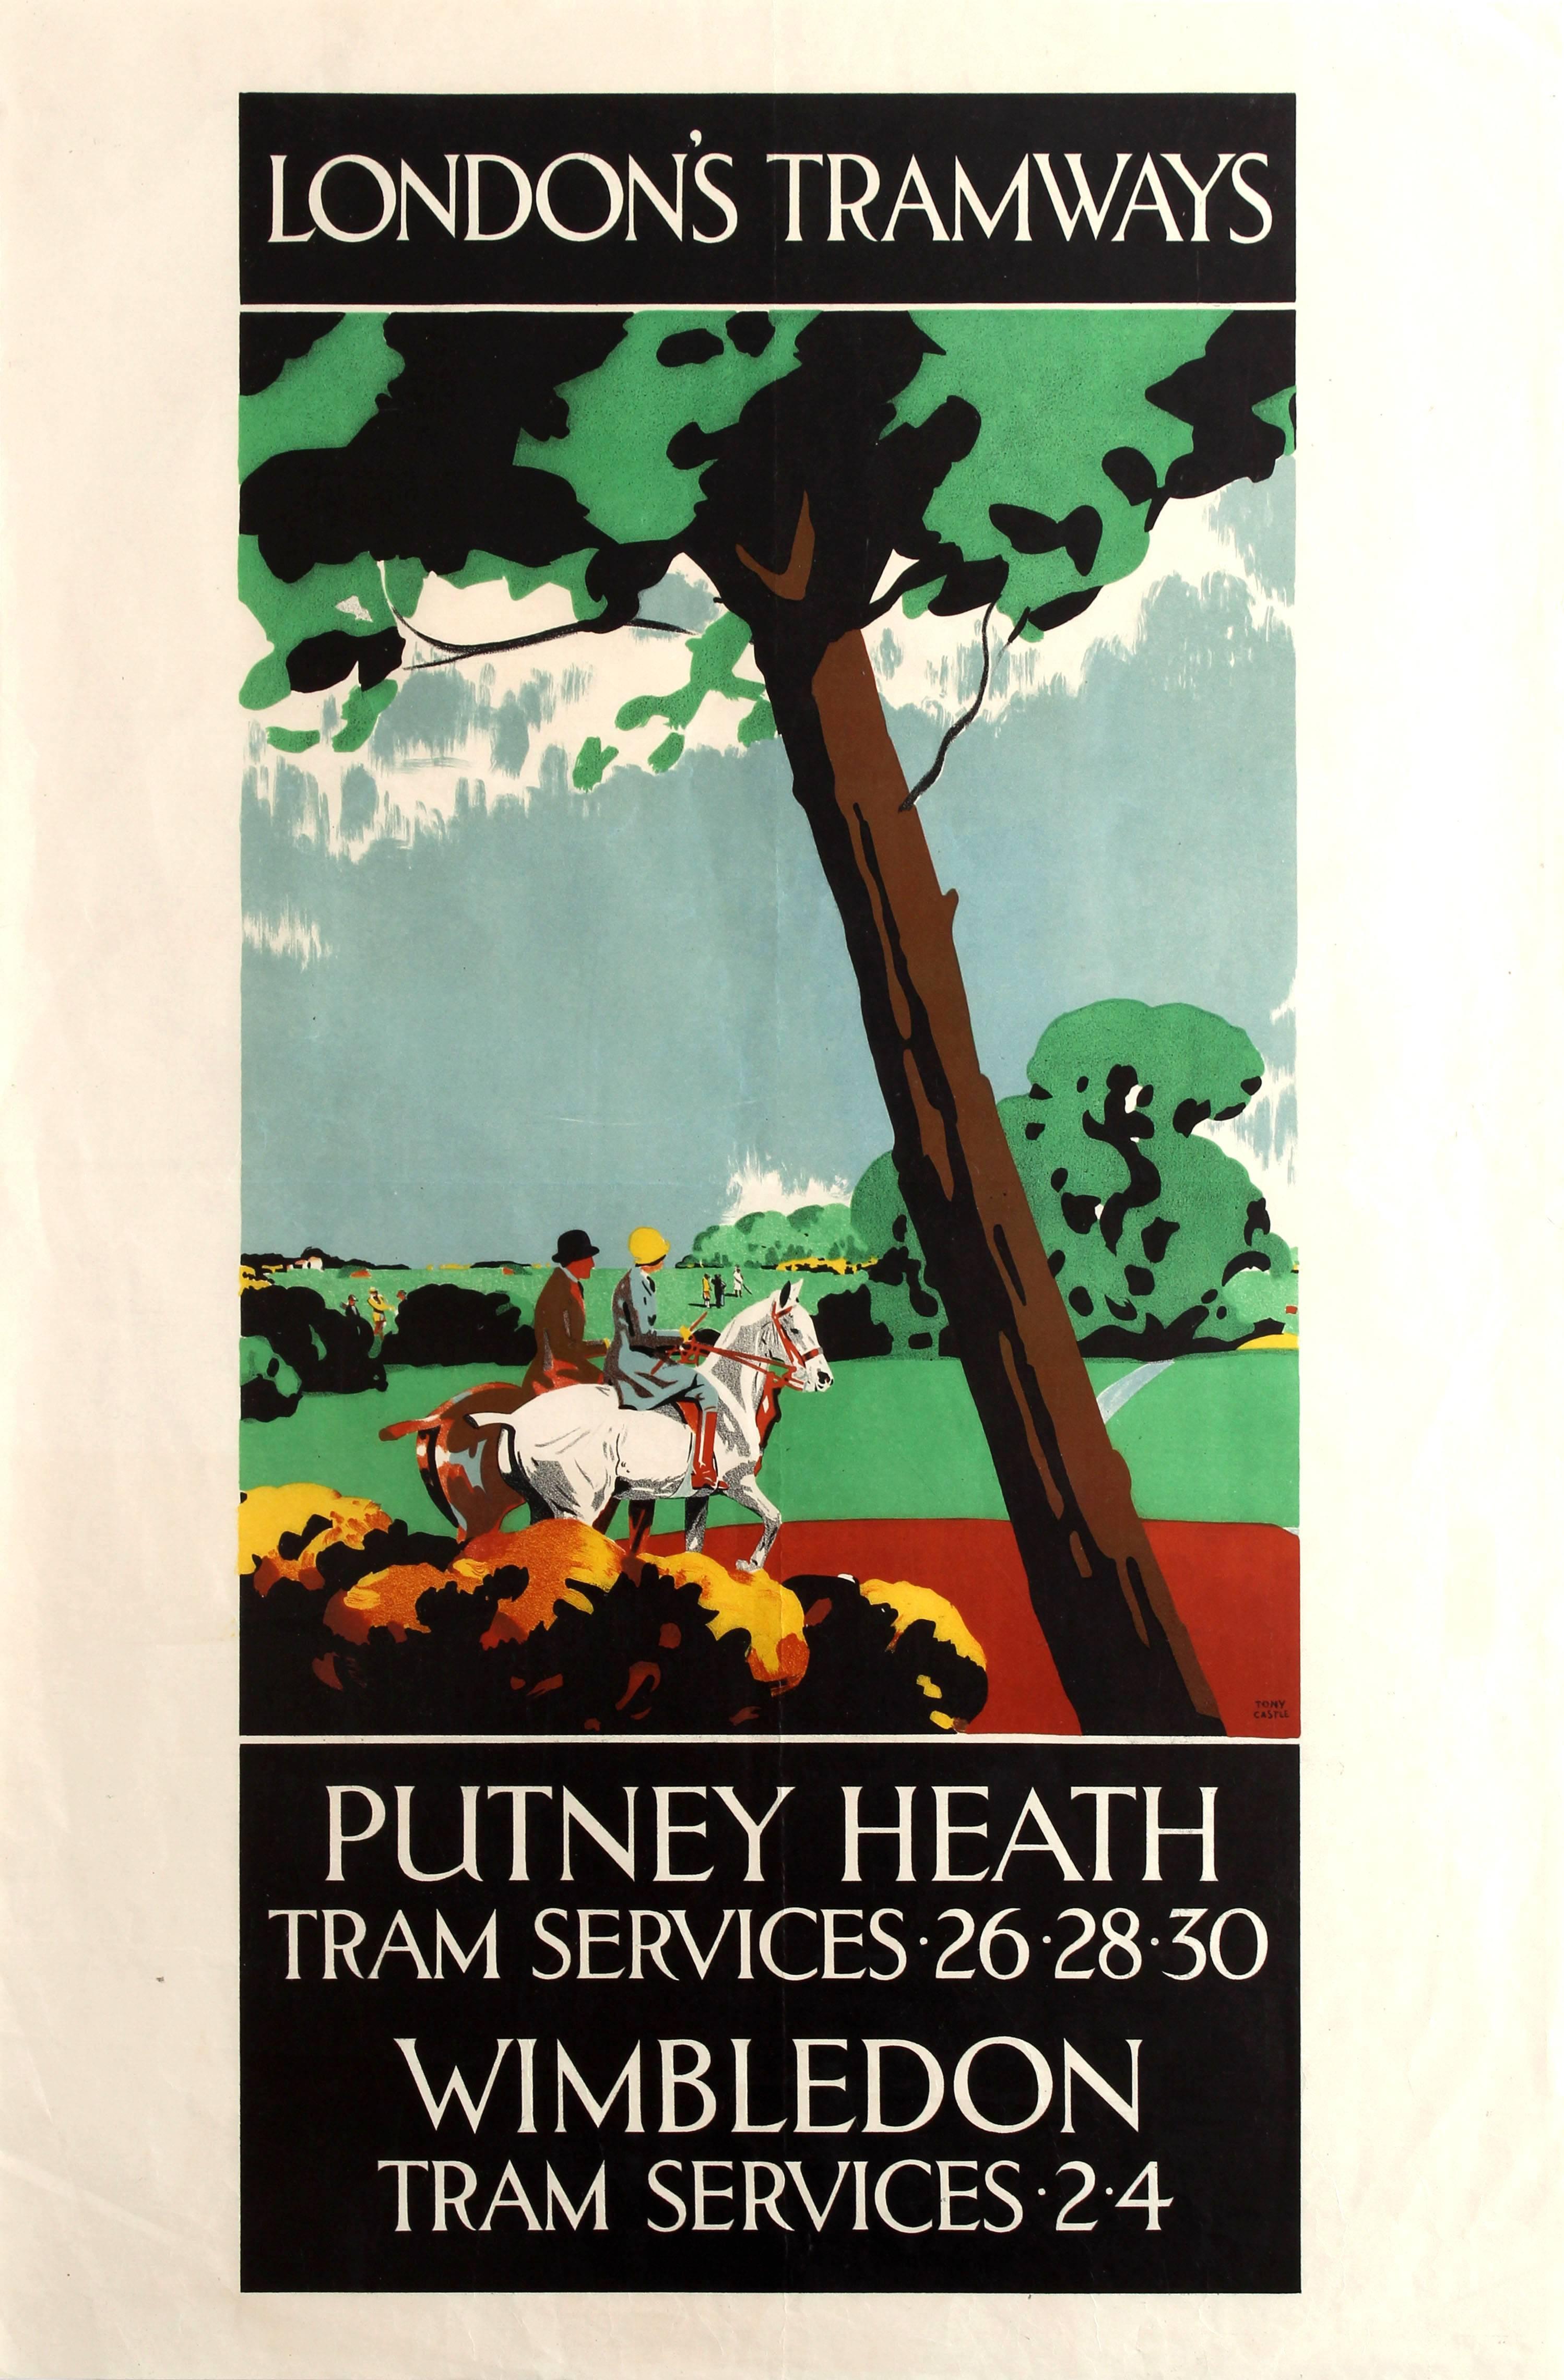 Tony Castle Print – Original Vintage Art Deco London Tramways Poster für Putney Heath und Wimbledon